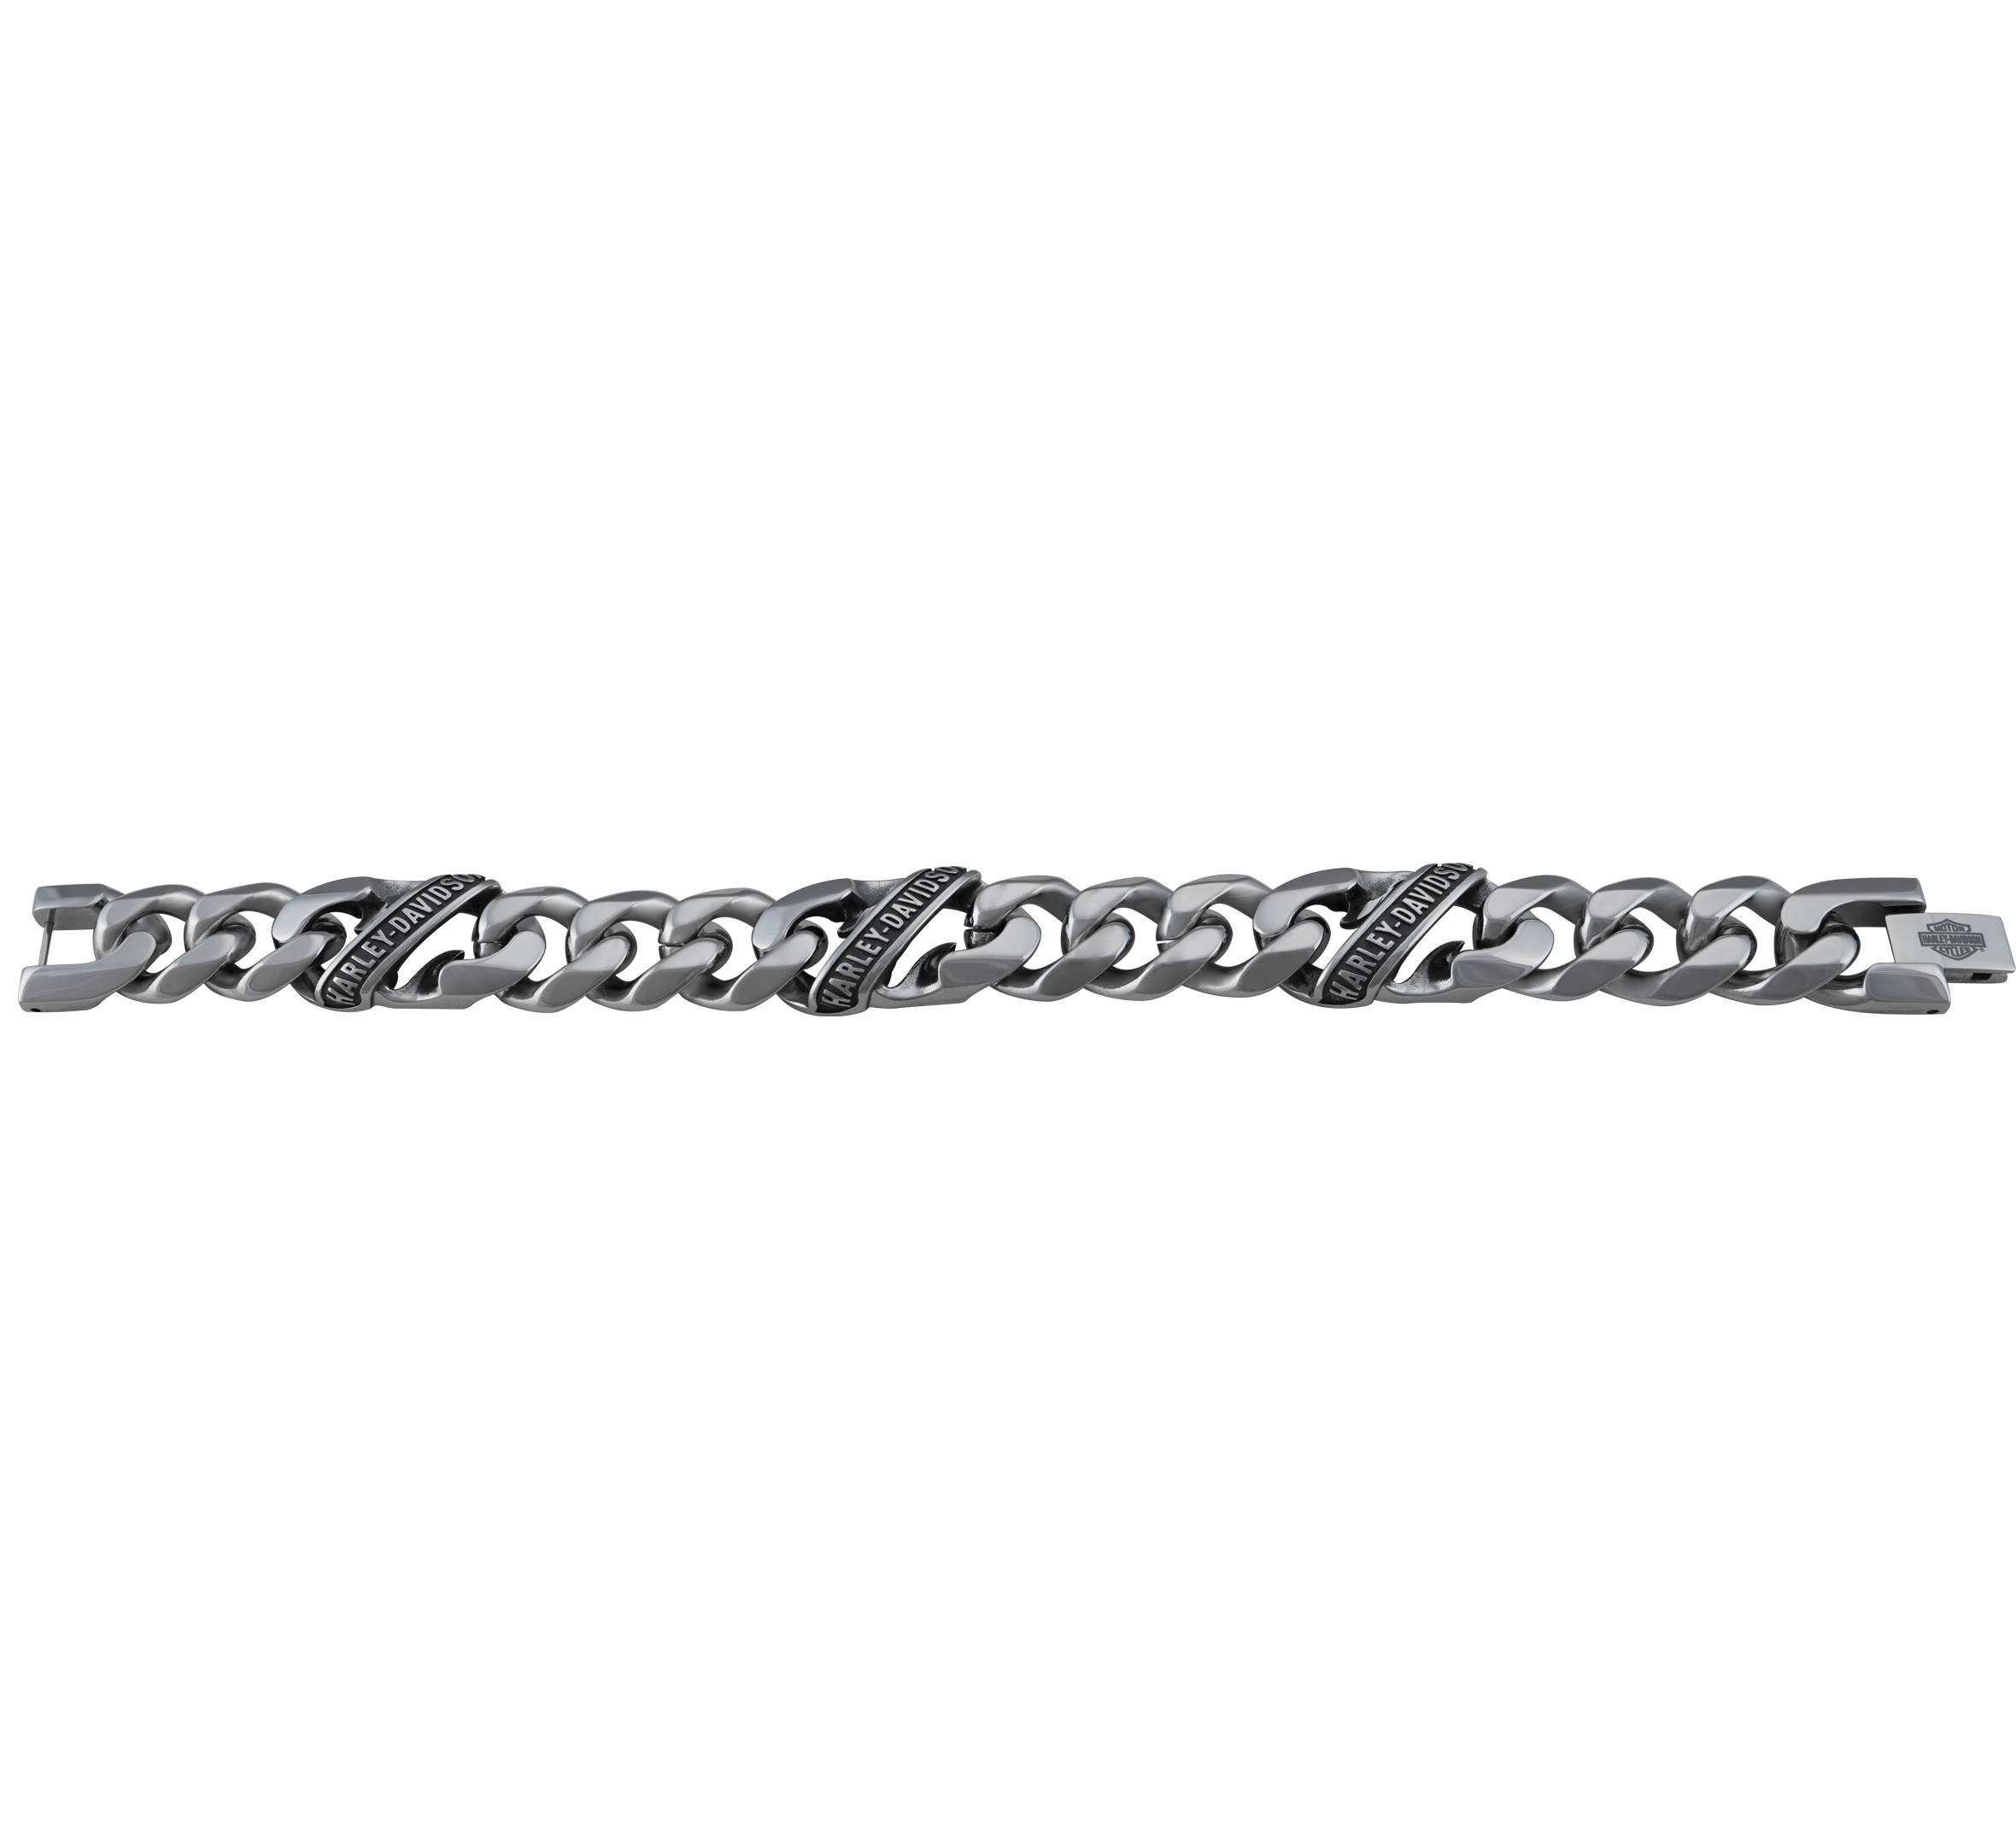 Harley-Davidson Men's Banner Curb Link Chain Necklace, Silver Steel - 22